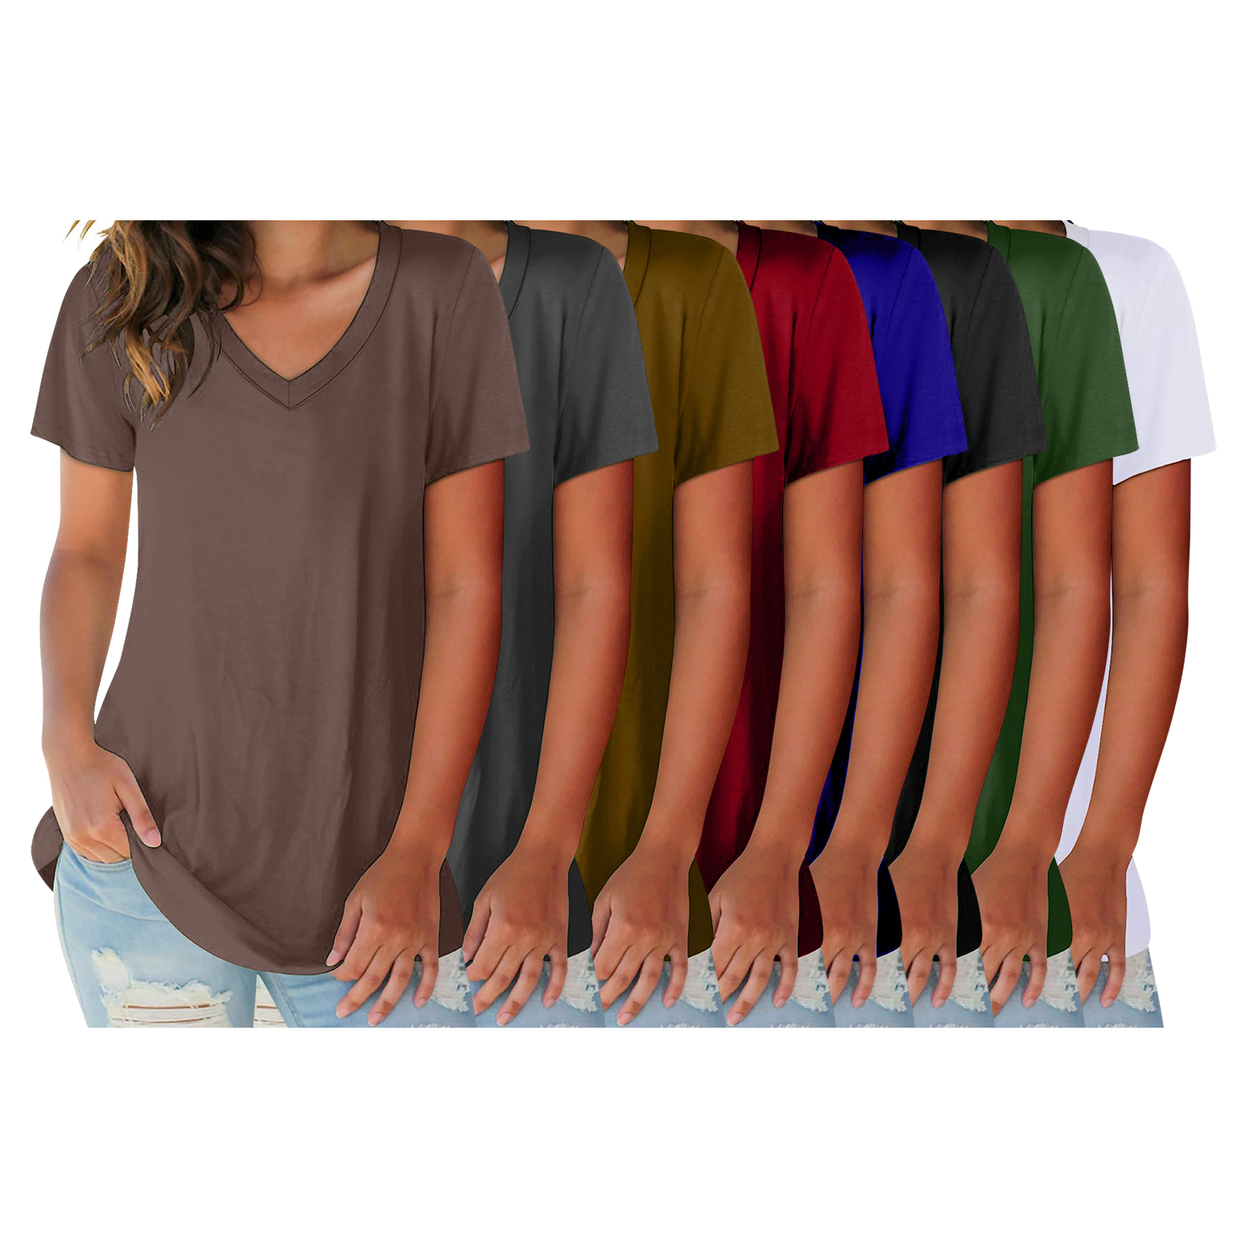 2-Pack: Women's Ultra Soft Smooth Cotton Blend Basic V-Neck Short Sleeve Shirts - Grey & Brown, Medium